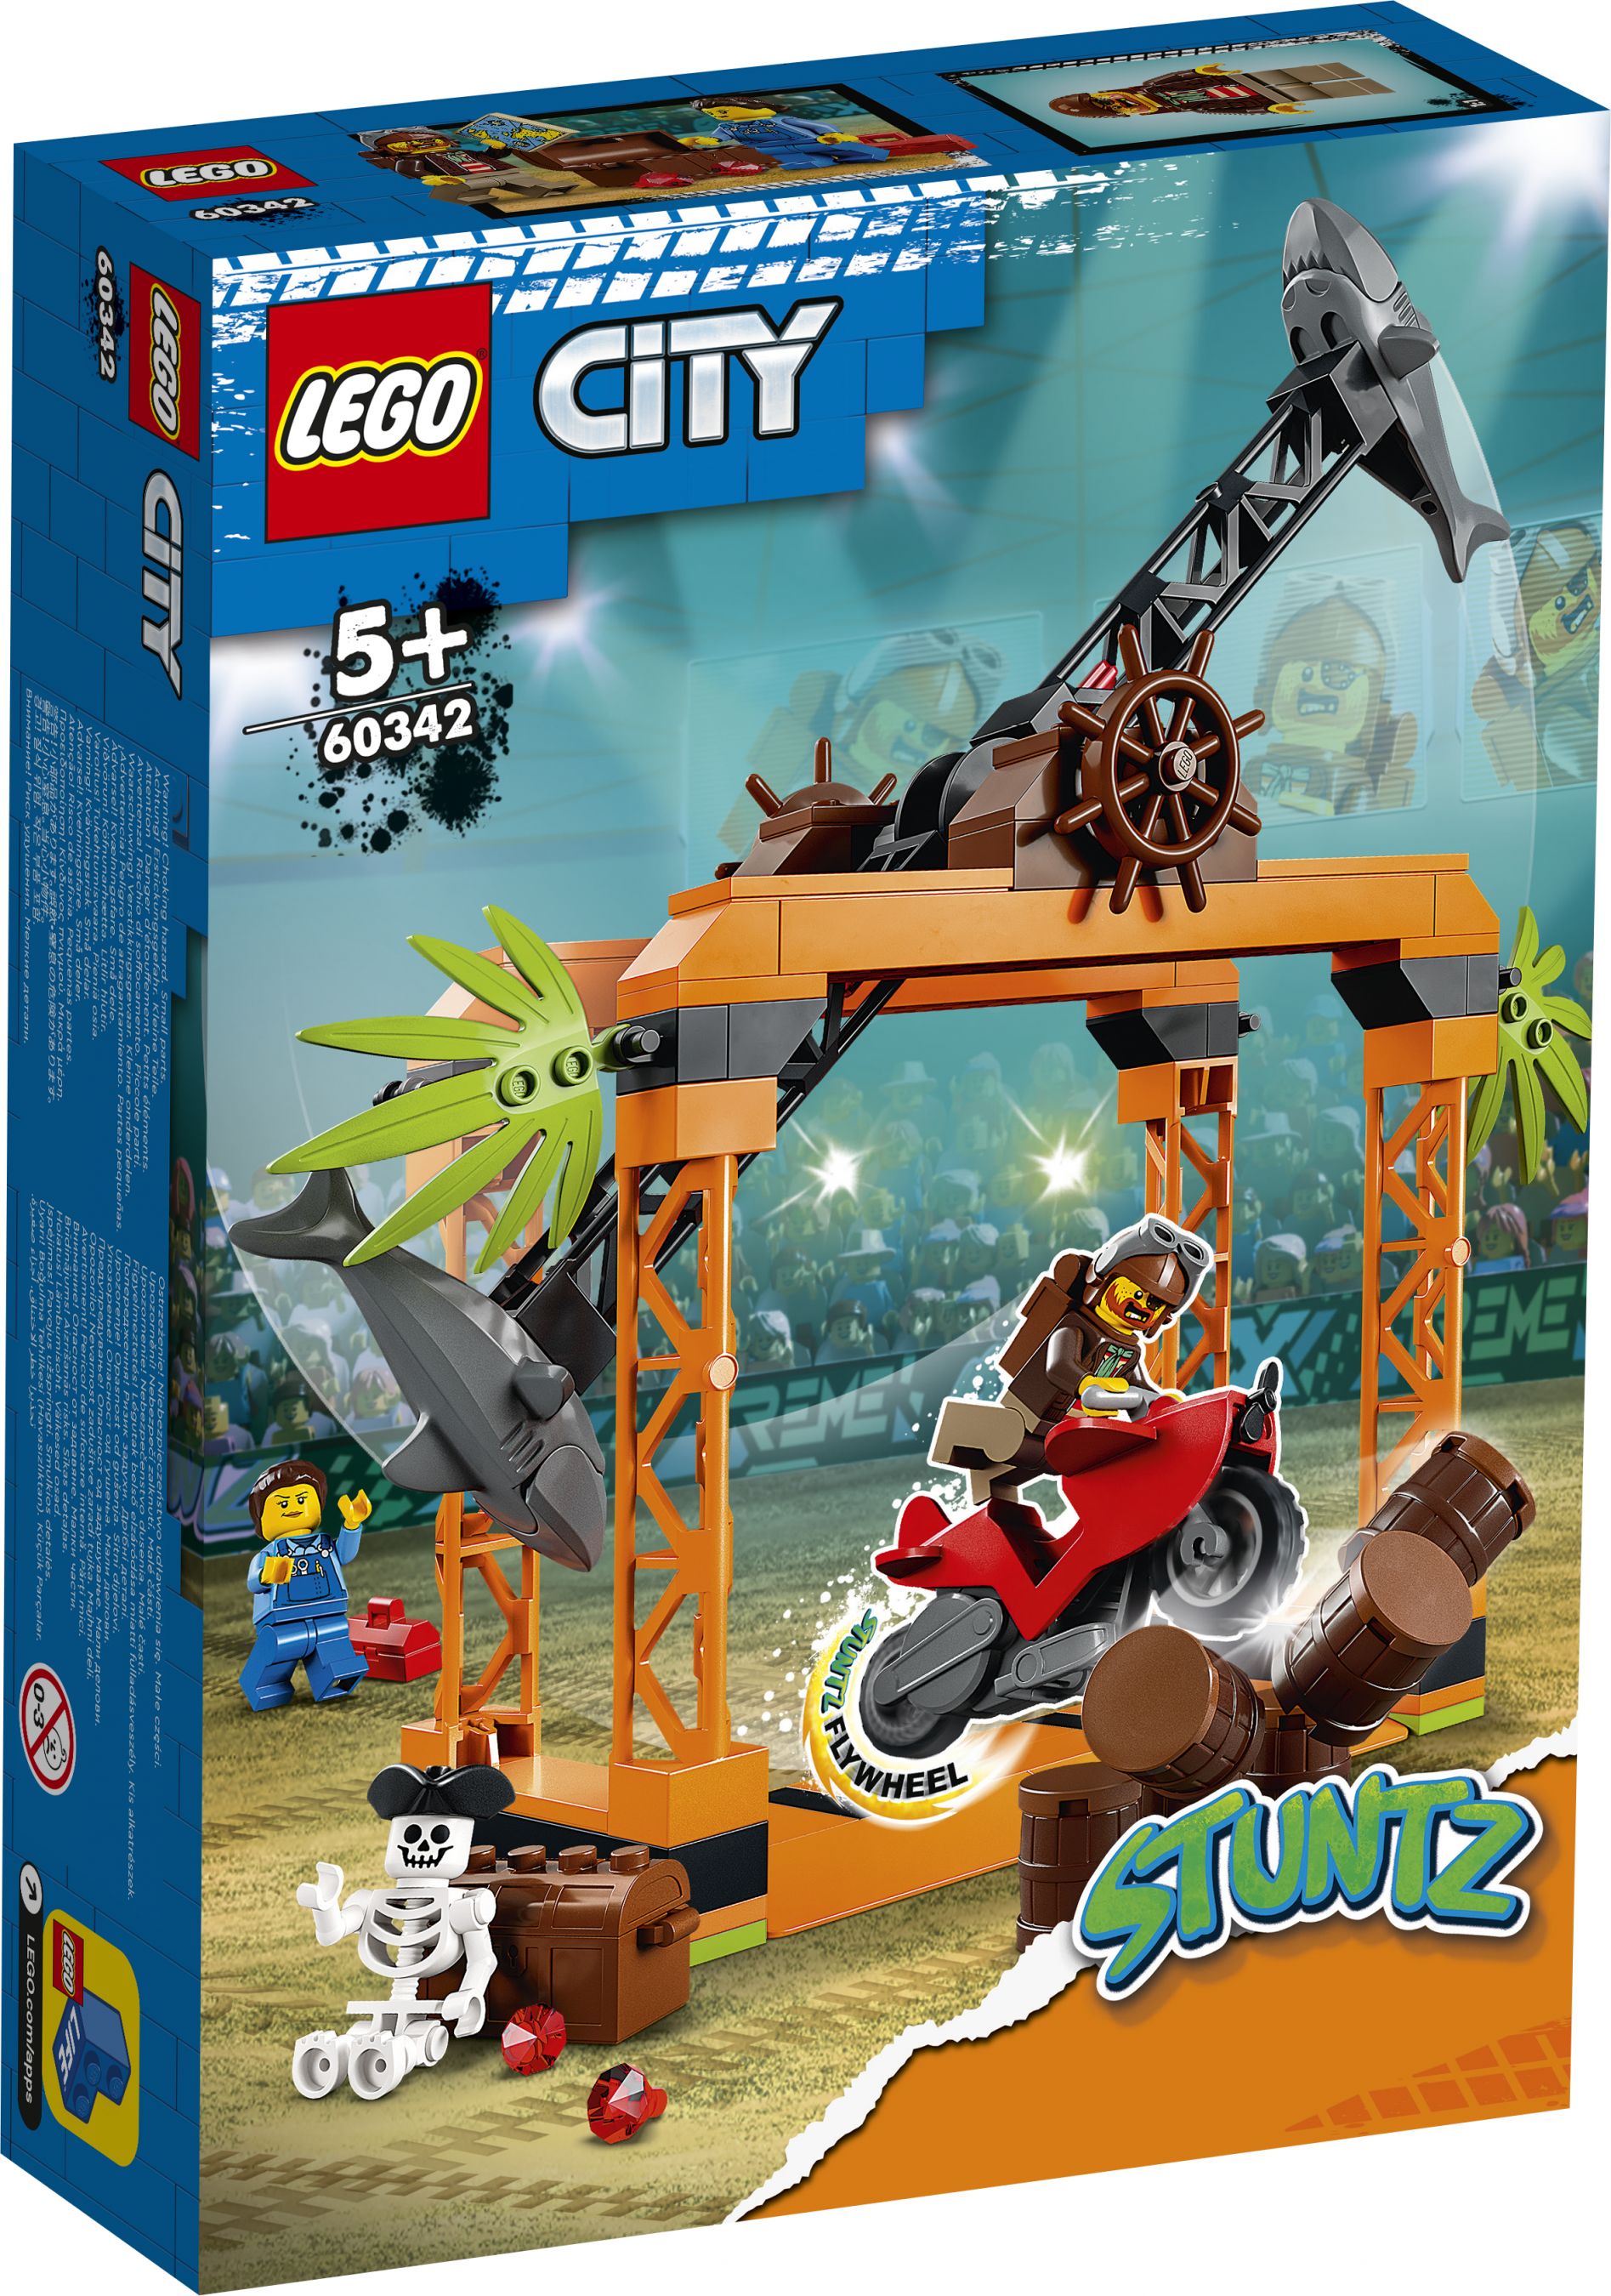 LEGO City 60342 Haiangriff-Stuntchallenge LEGO_60342_Box1_v29.jpg